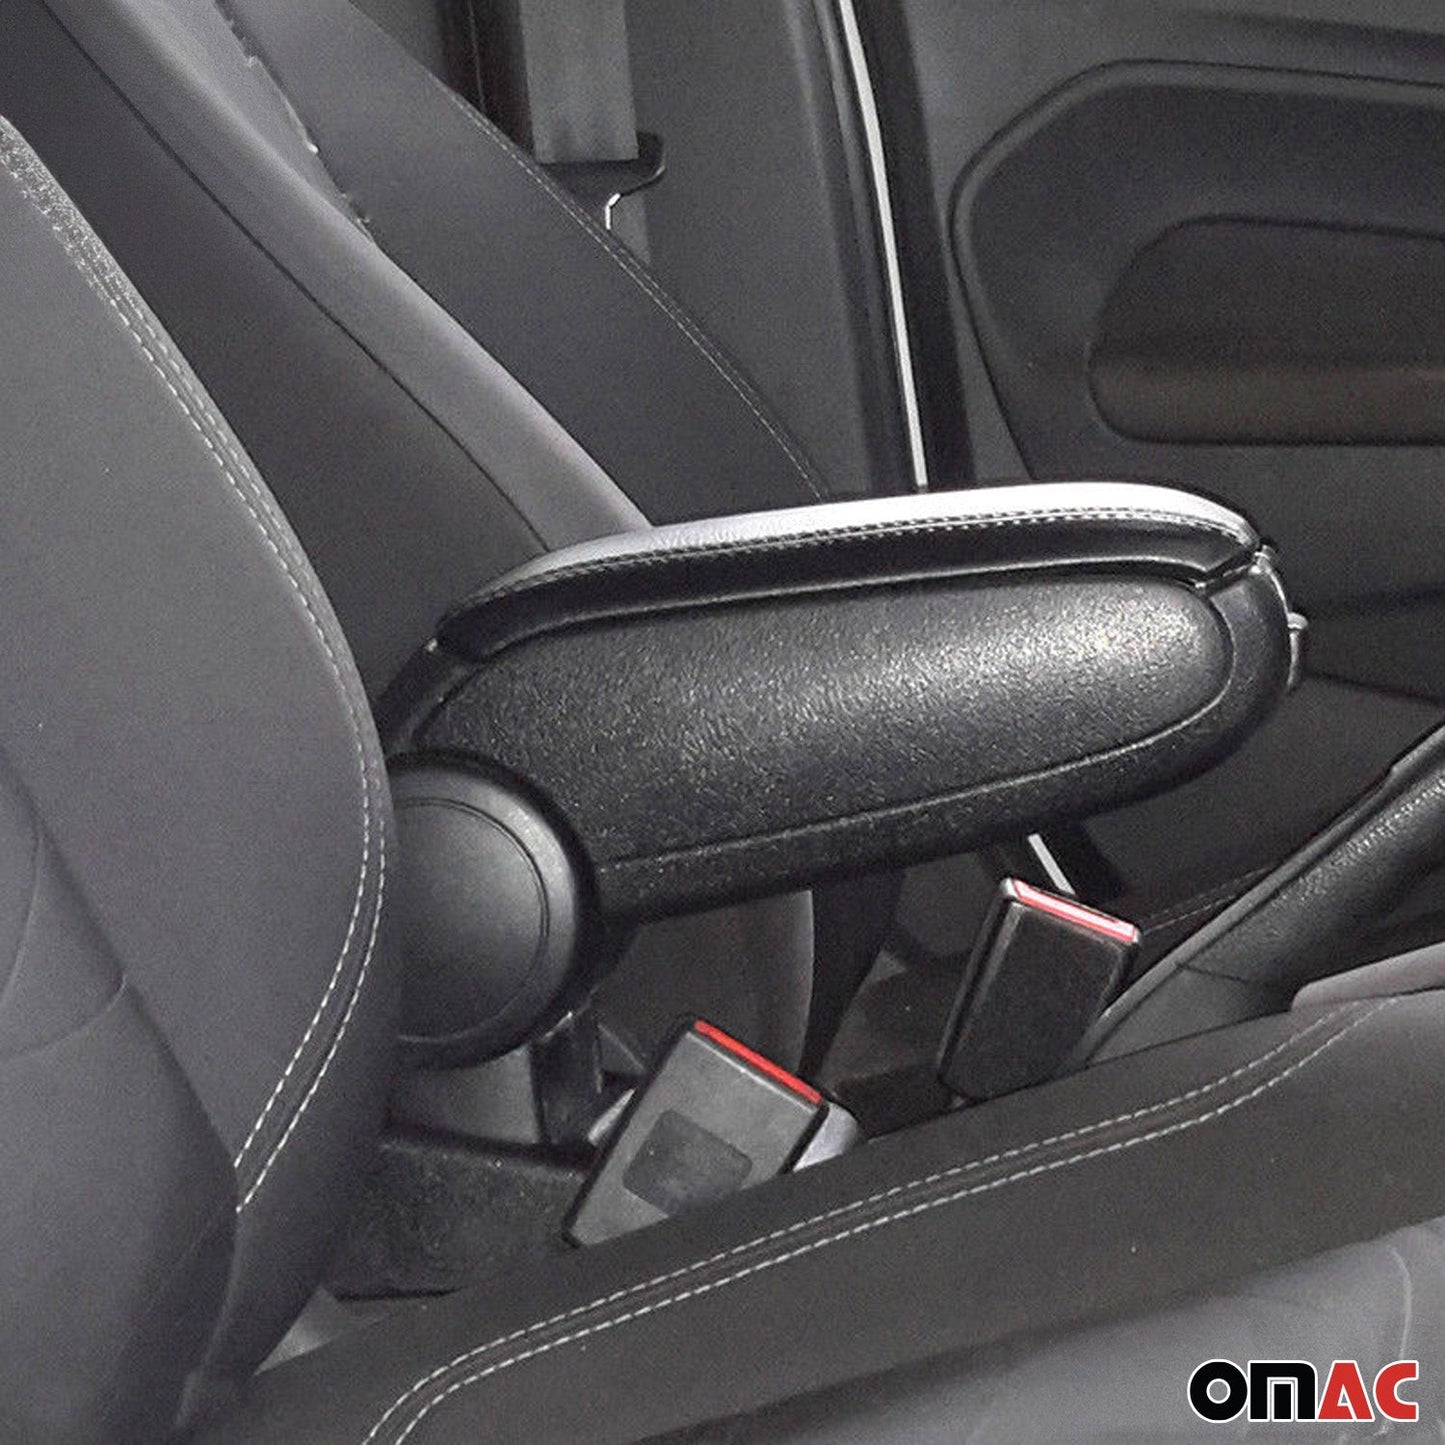 OMAC Black Center Console Armrest for VW Rabbit GTI 2006-2009 Plastic PU Leather 1Pc 7503603